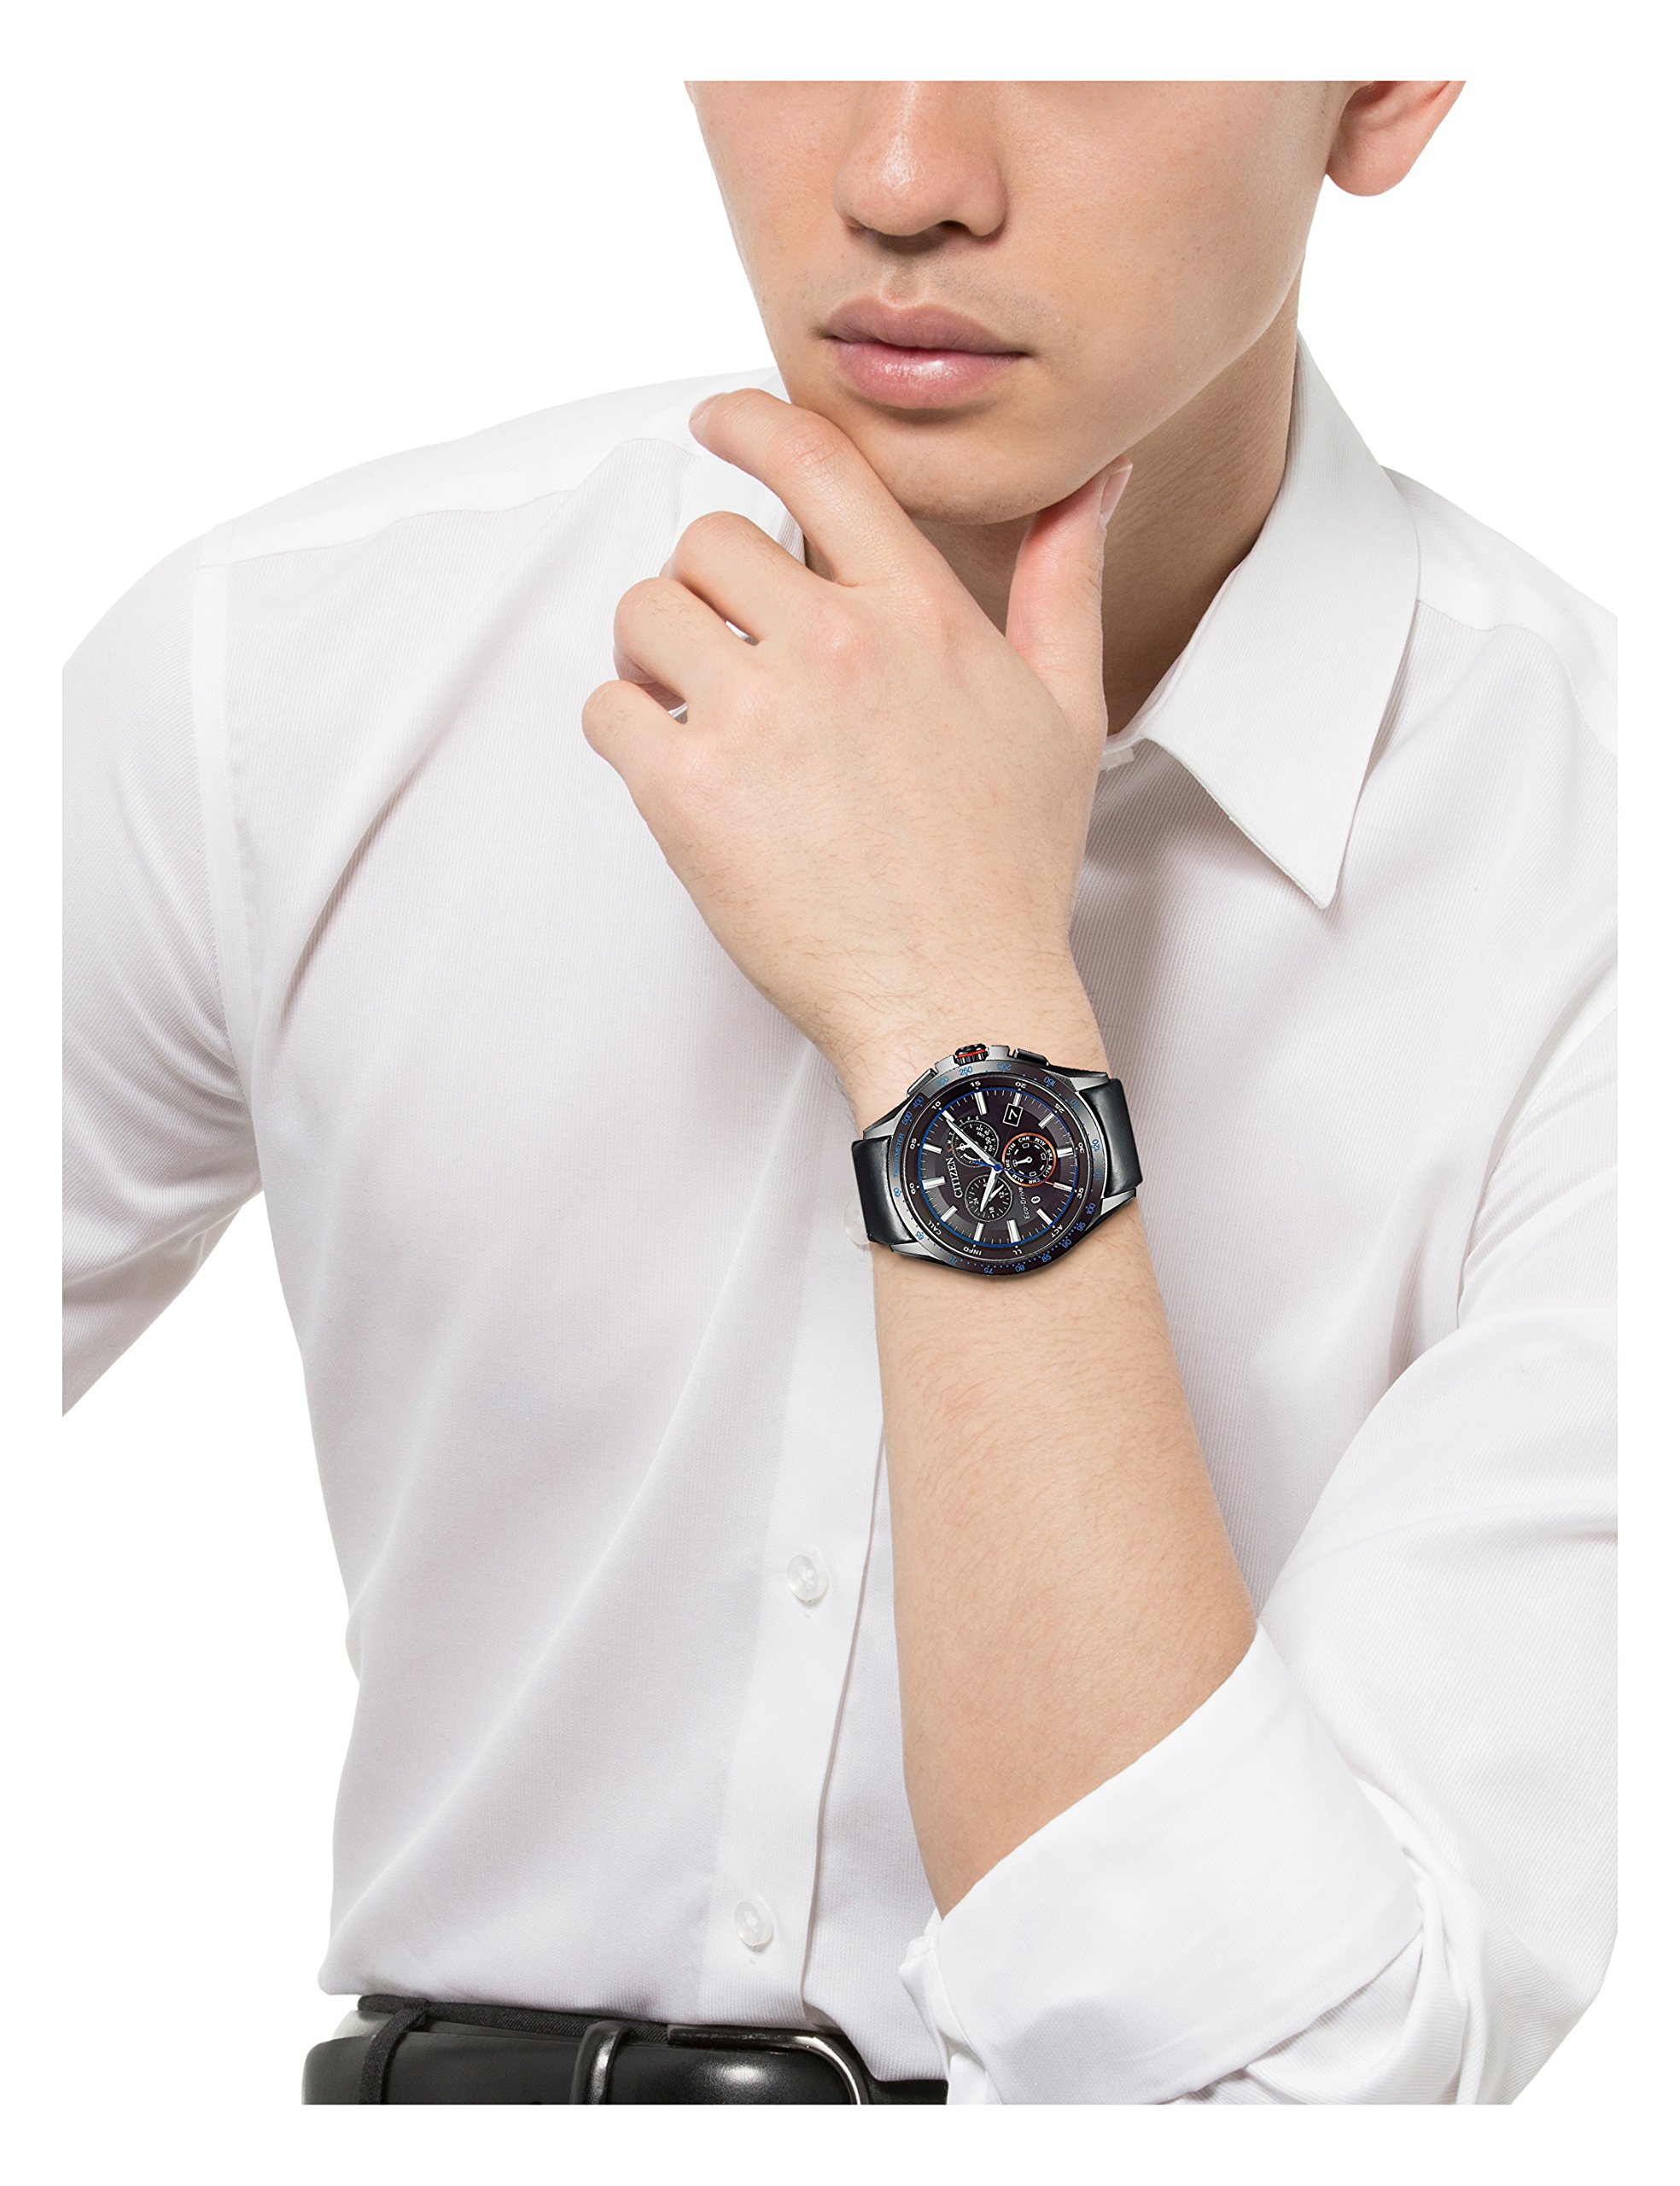 Buy [シチズン]CITIZEN 腕時計 エコ・ドライブ Bluetooth BZ1035-09E